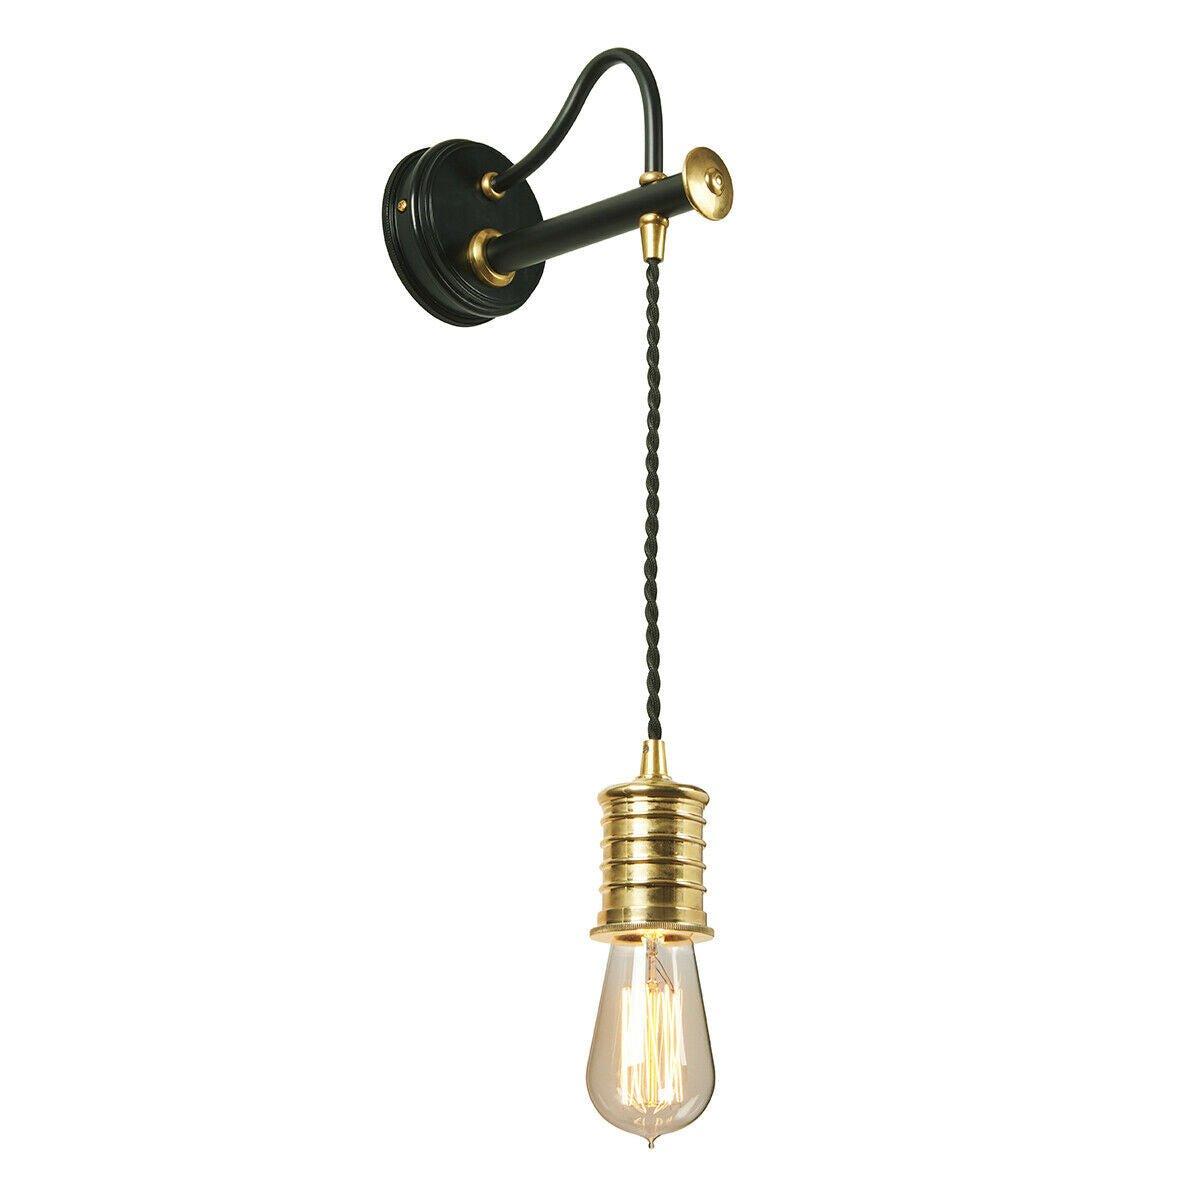 Wall Light Sconce Black Highly Polished Brass Finish LED E27 60W Bulb